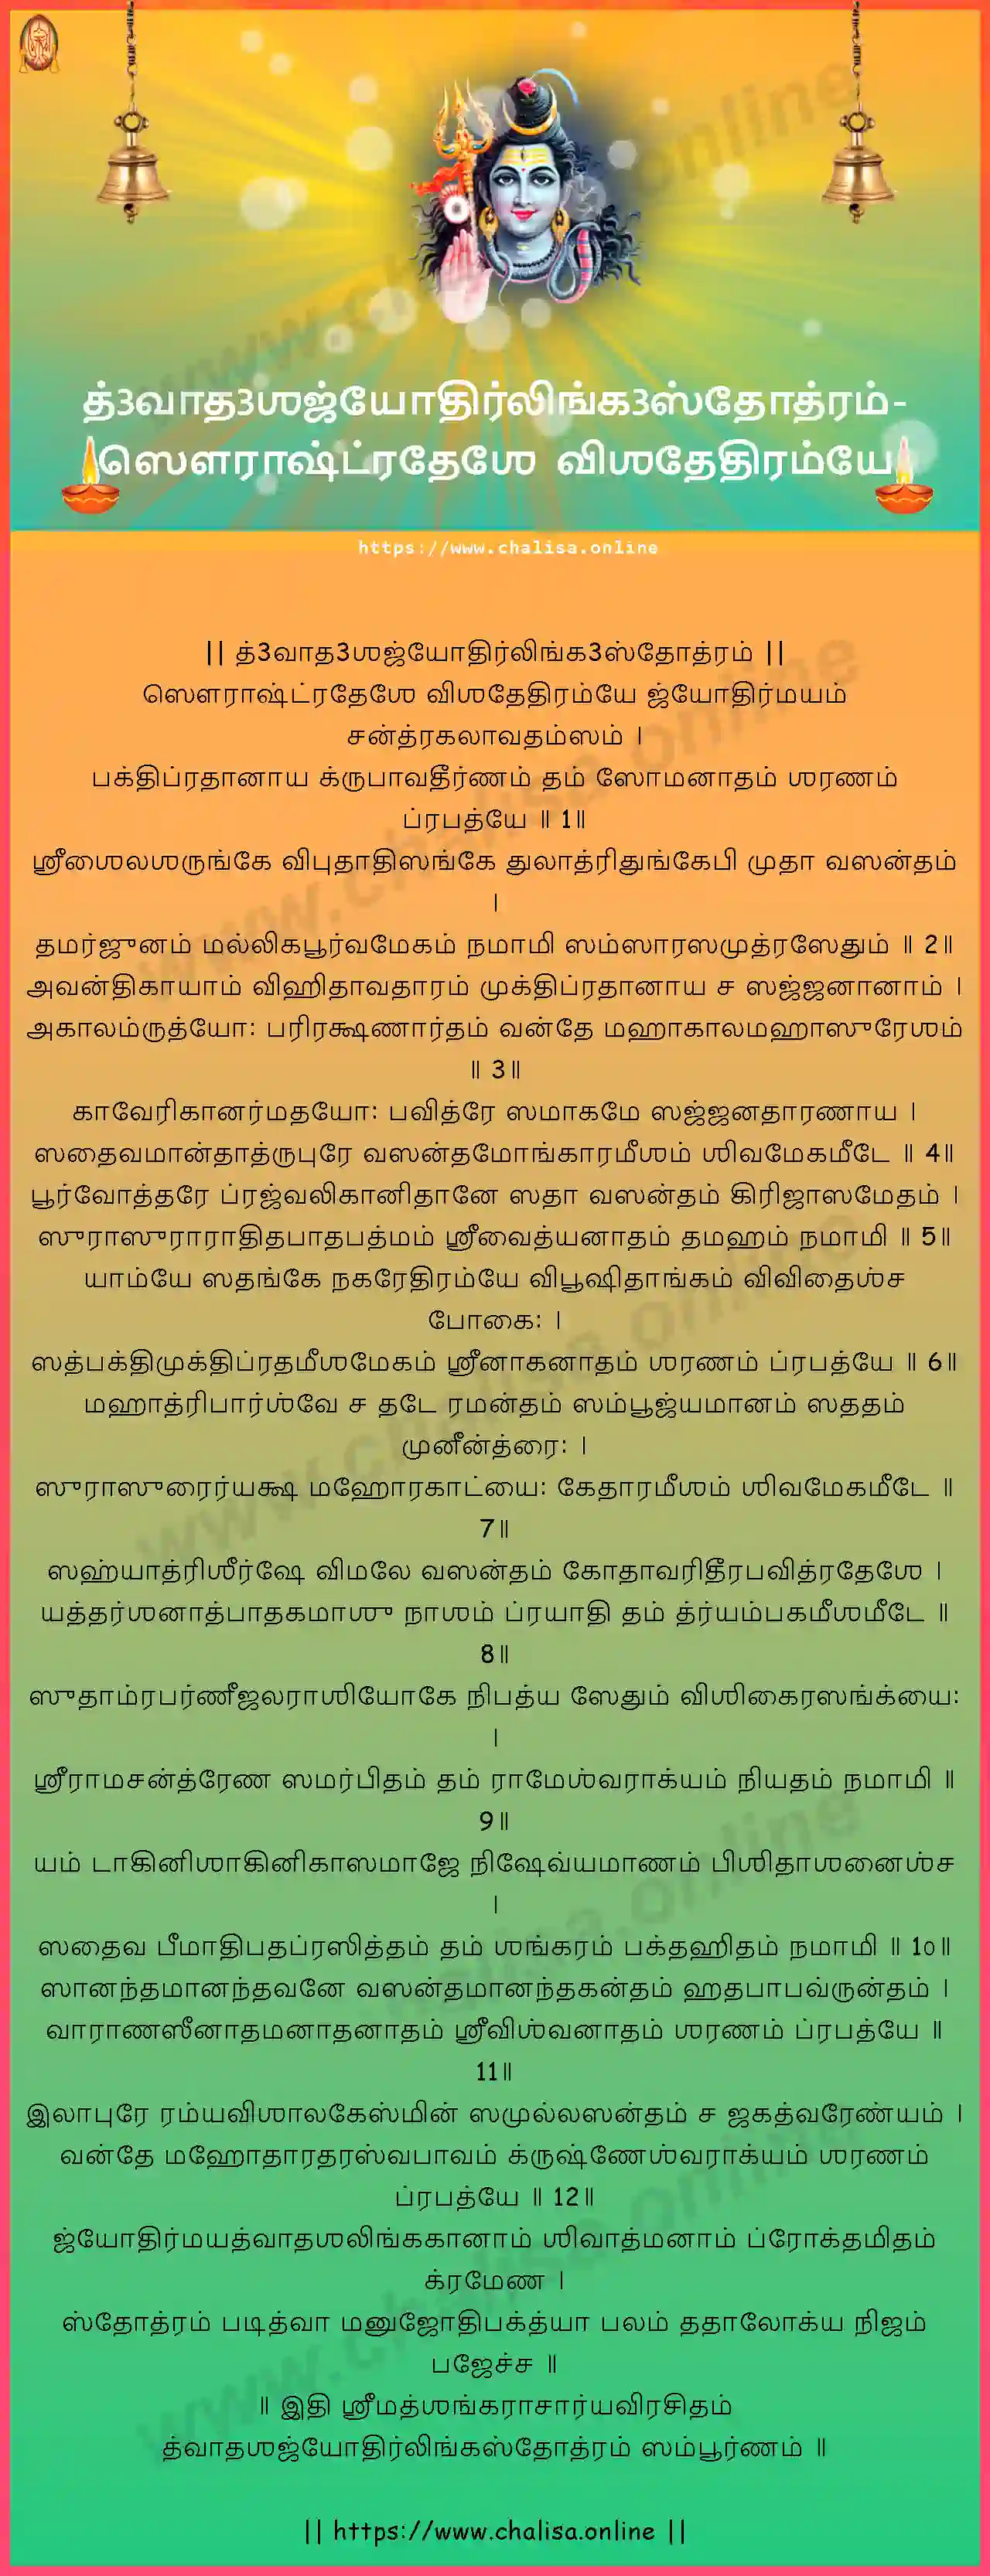 saurastradese-dvadasha-jyothirlinga-stotram-tamil-tamil-lyrics-download